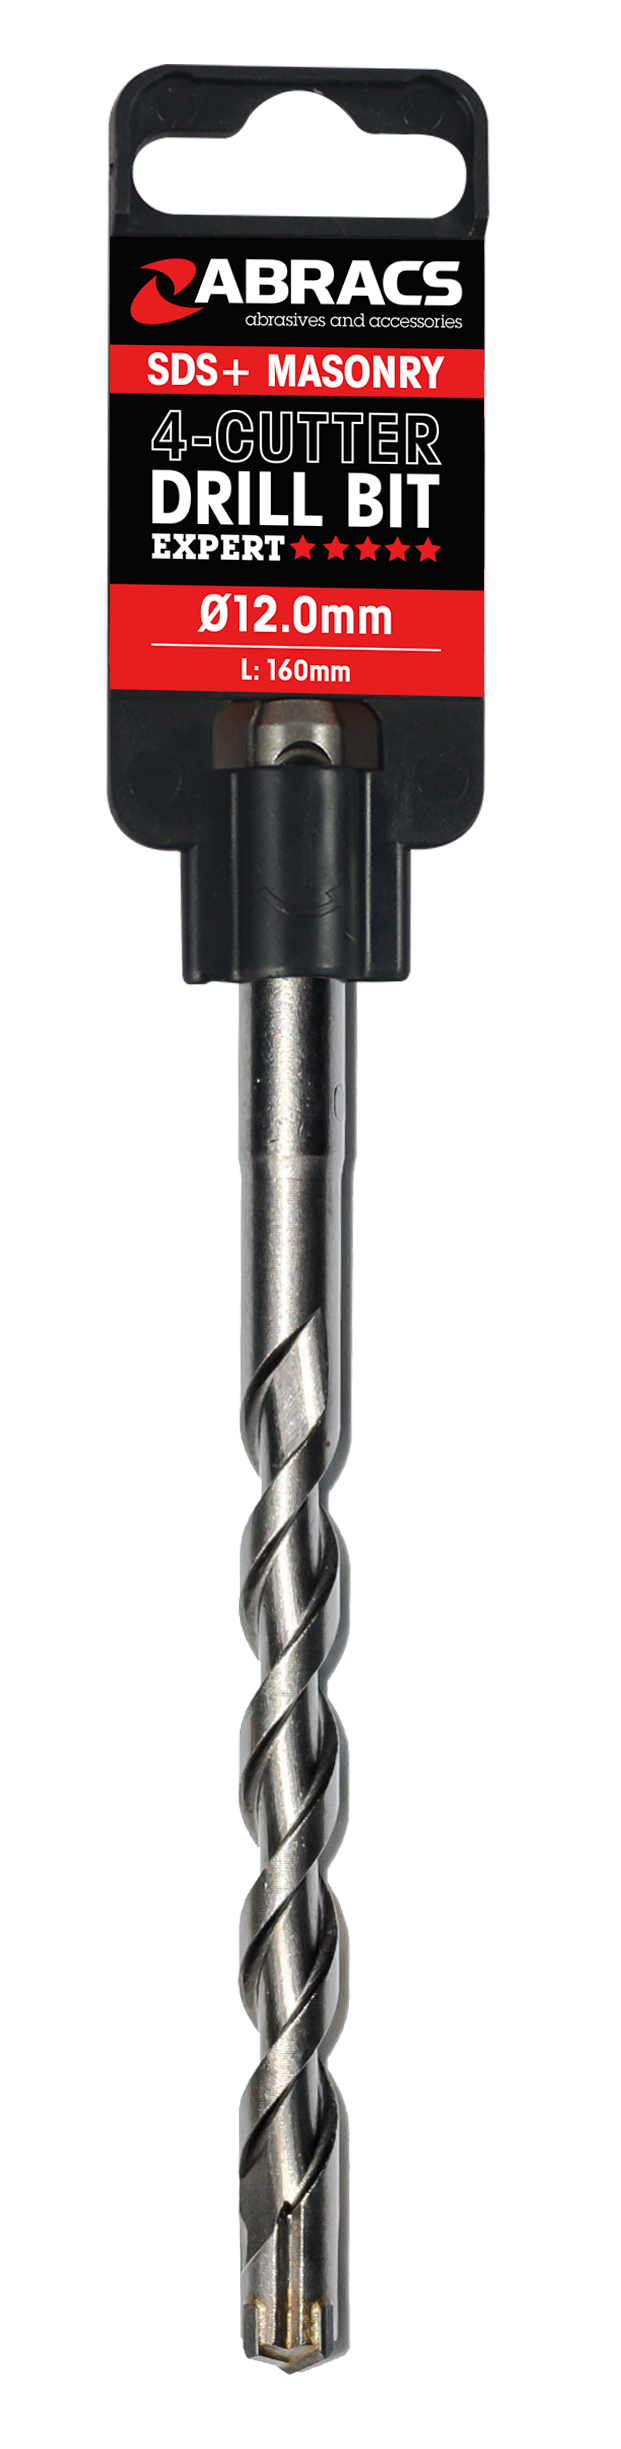 DBCX160210 16.0mm x 210mm SDS+ Masonry Drill Bit - 4 Cutter